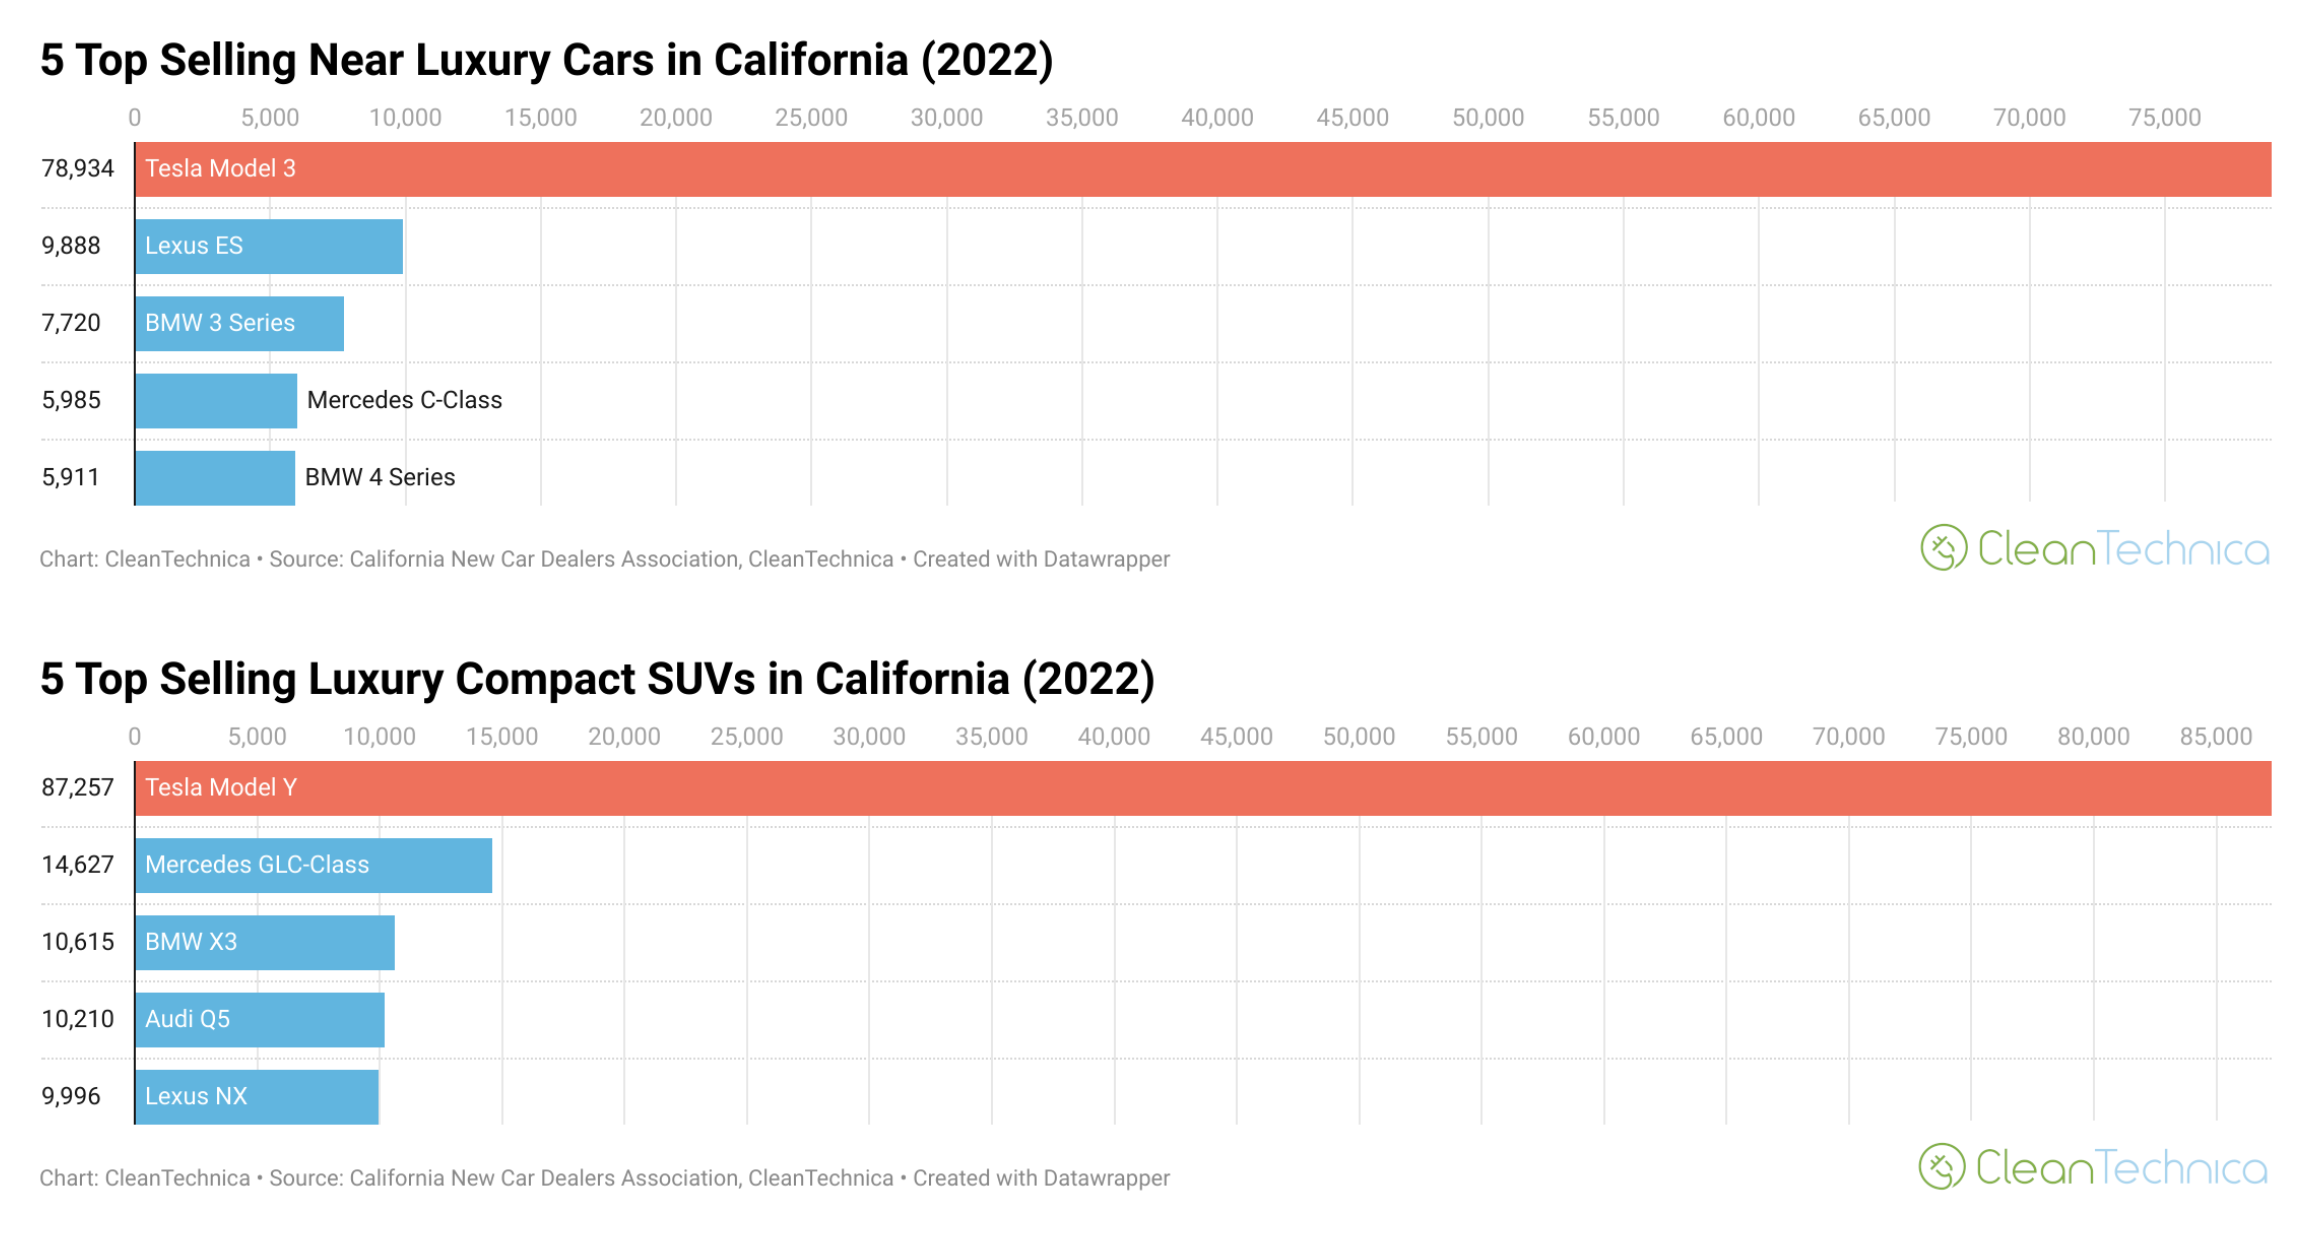 Does The Tesla Model 3 Belong In The Near Luxury Car Category? -  CleanTechnica